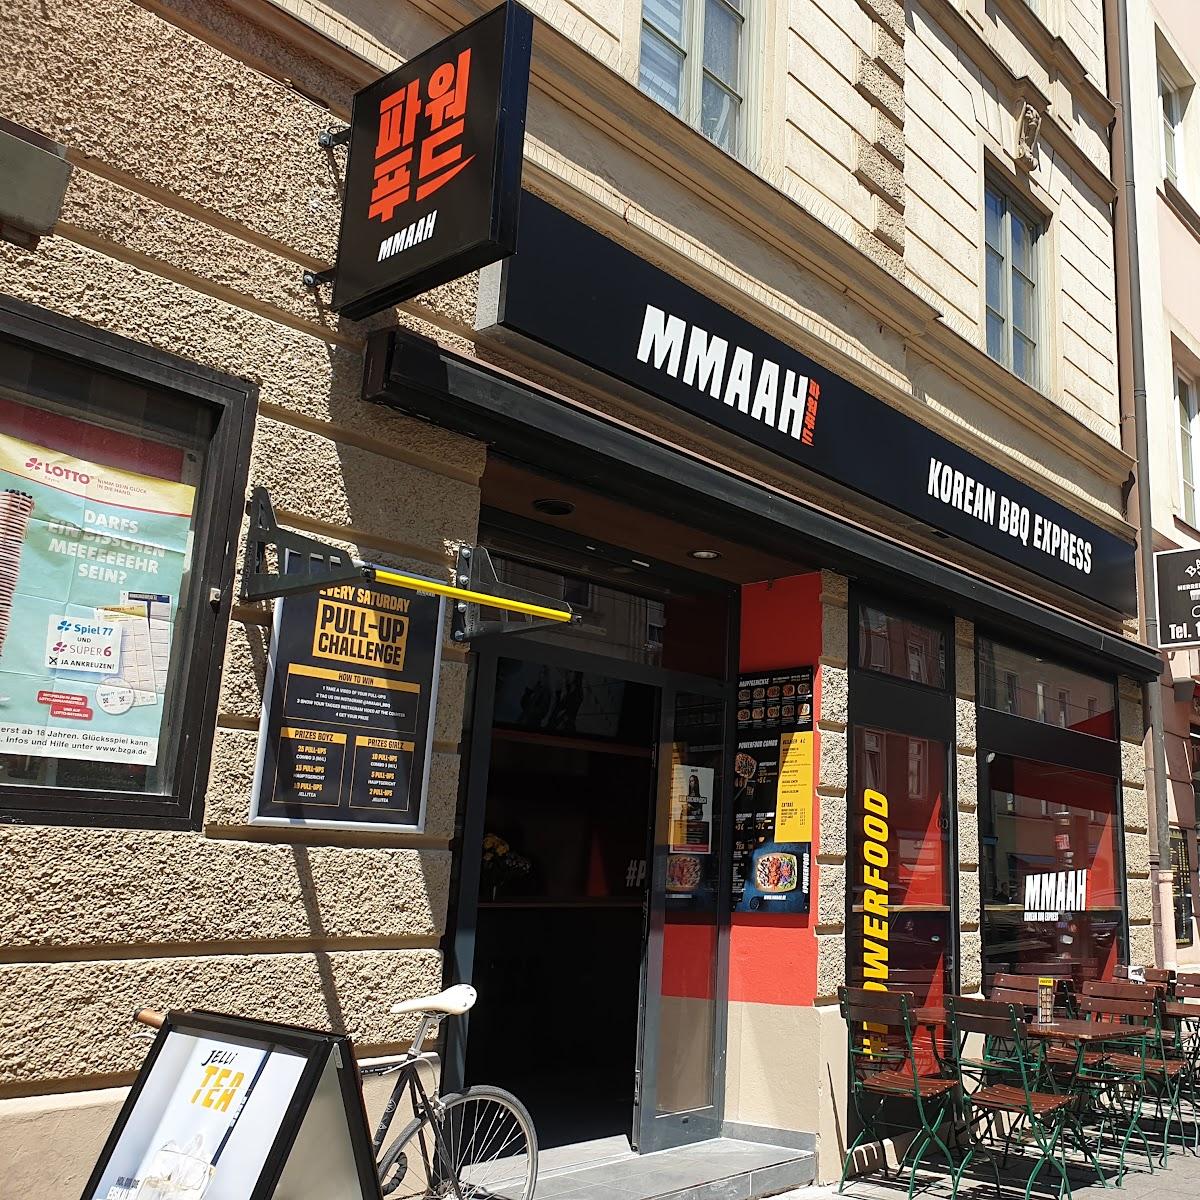 Mmaah - Korean BBQ Express München 🍽️ Speisekarte